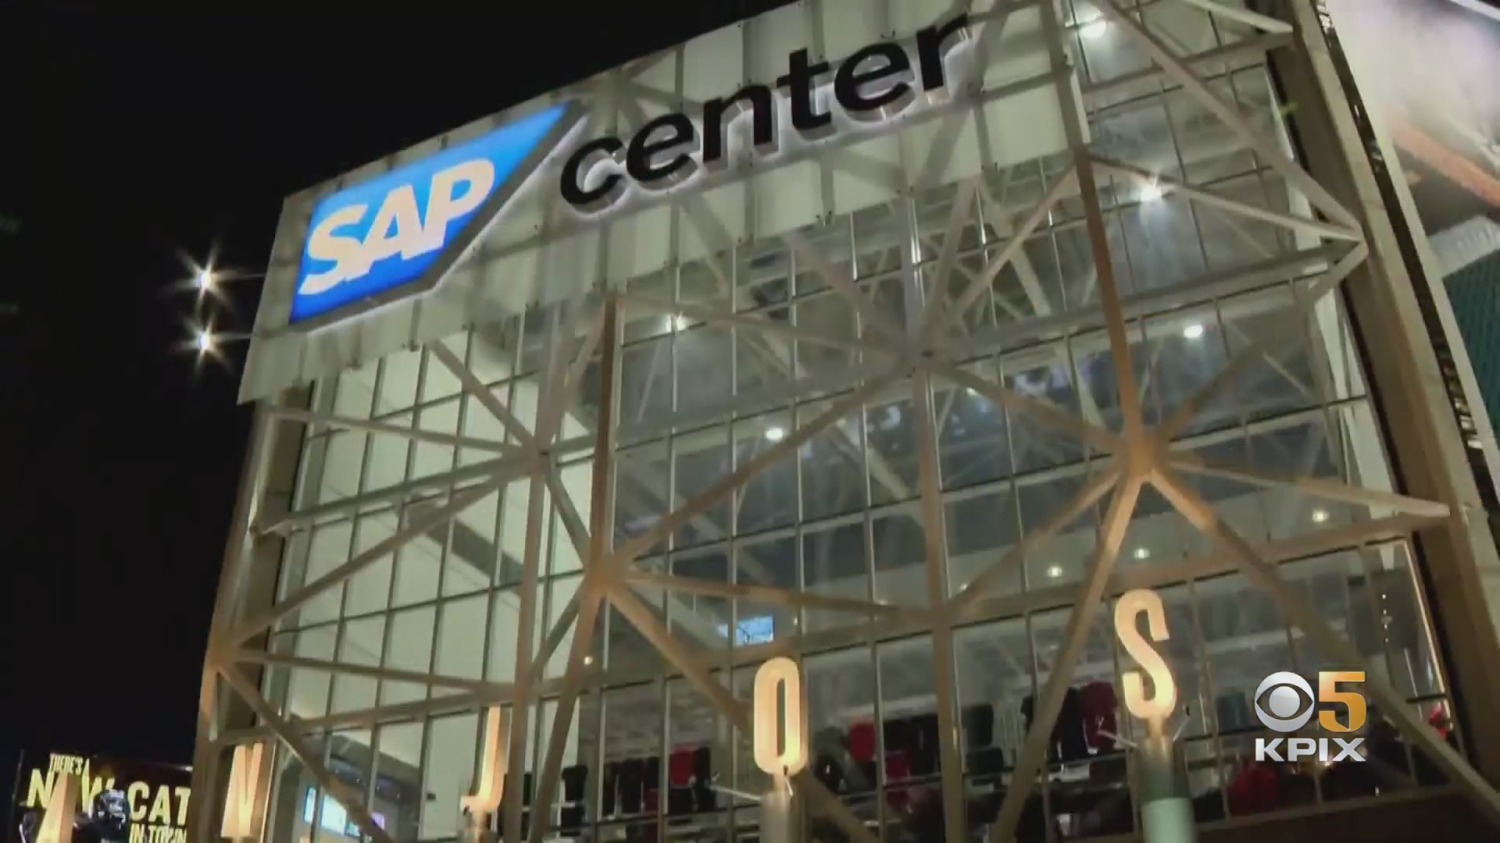 SAP Center Hosts 1st Concert After Lifting Of Santa Clara County Mask